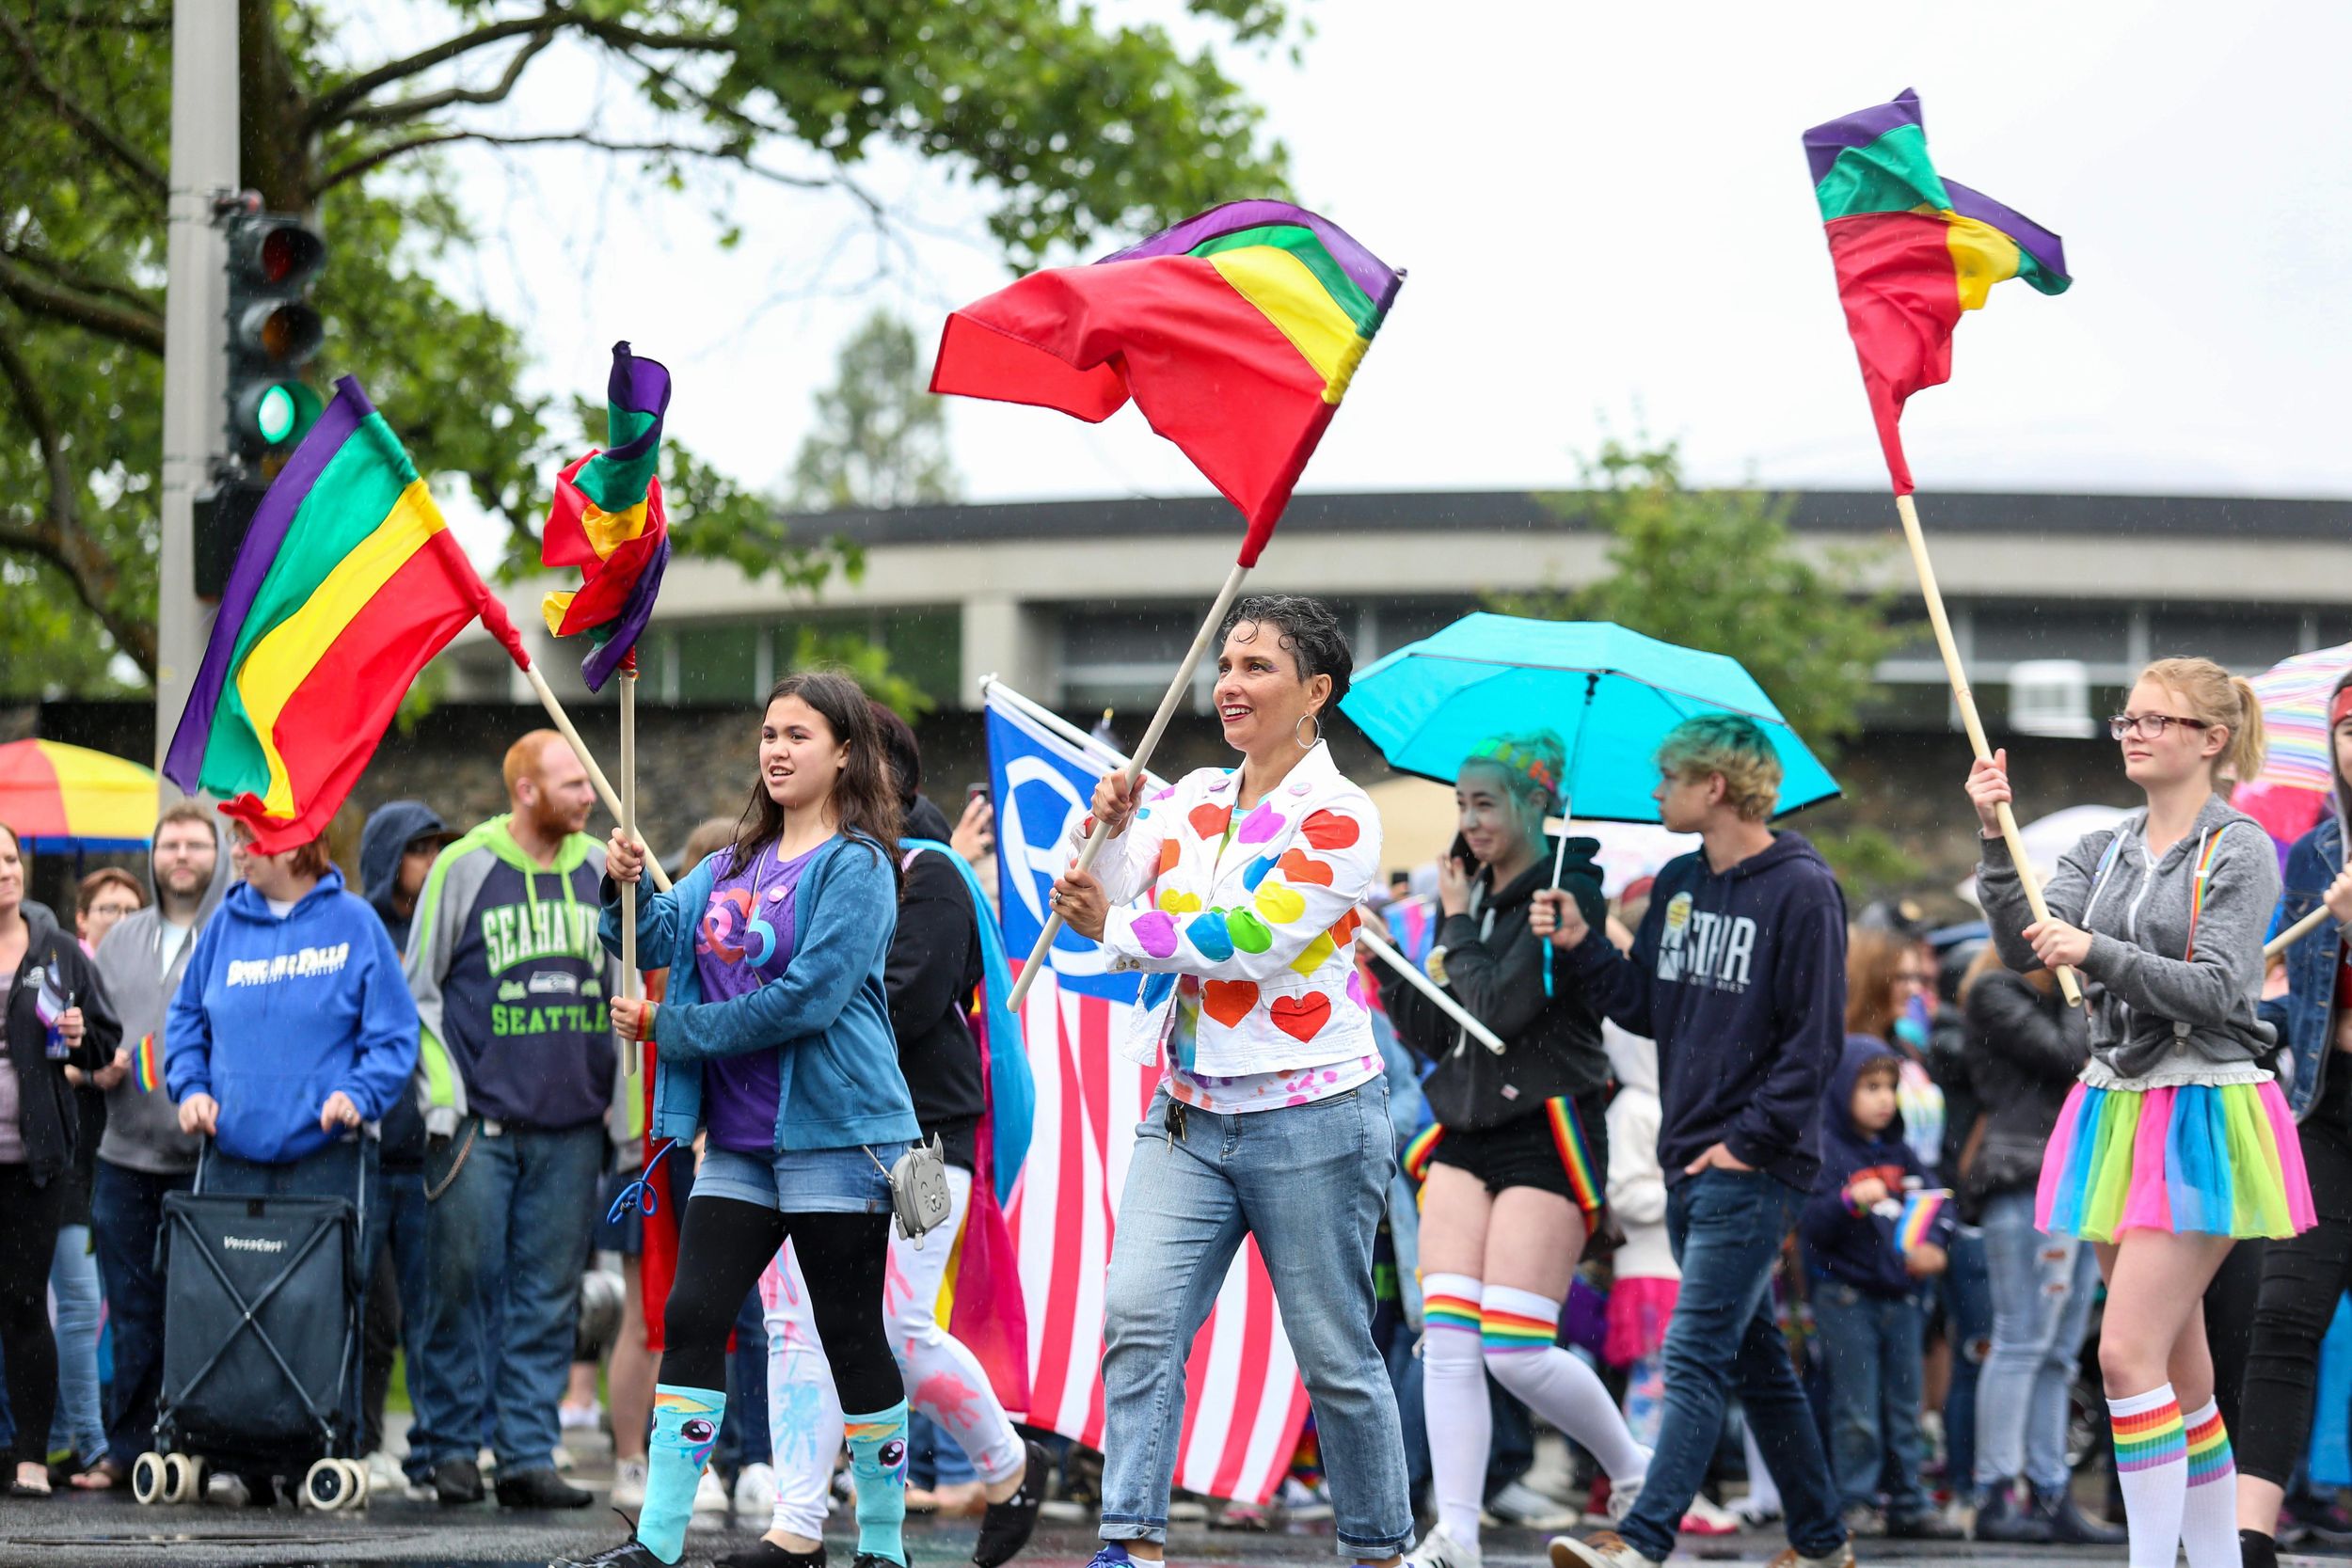 Spokane Pride Parade hits the street Saturday The SpokesmanReview